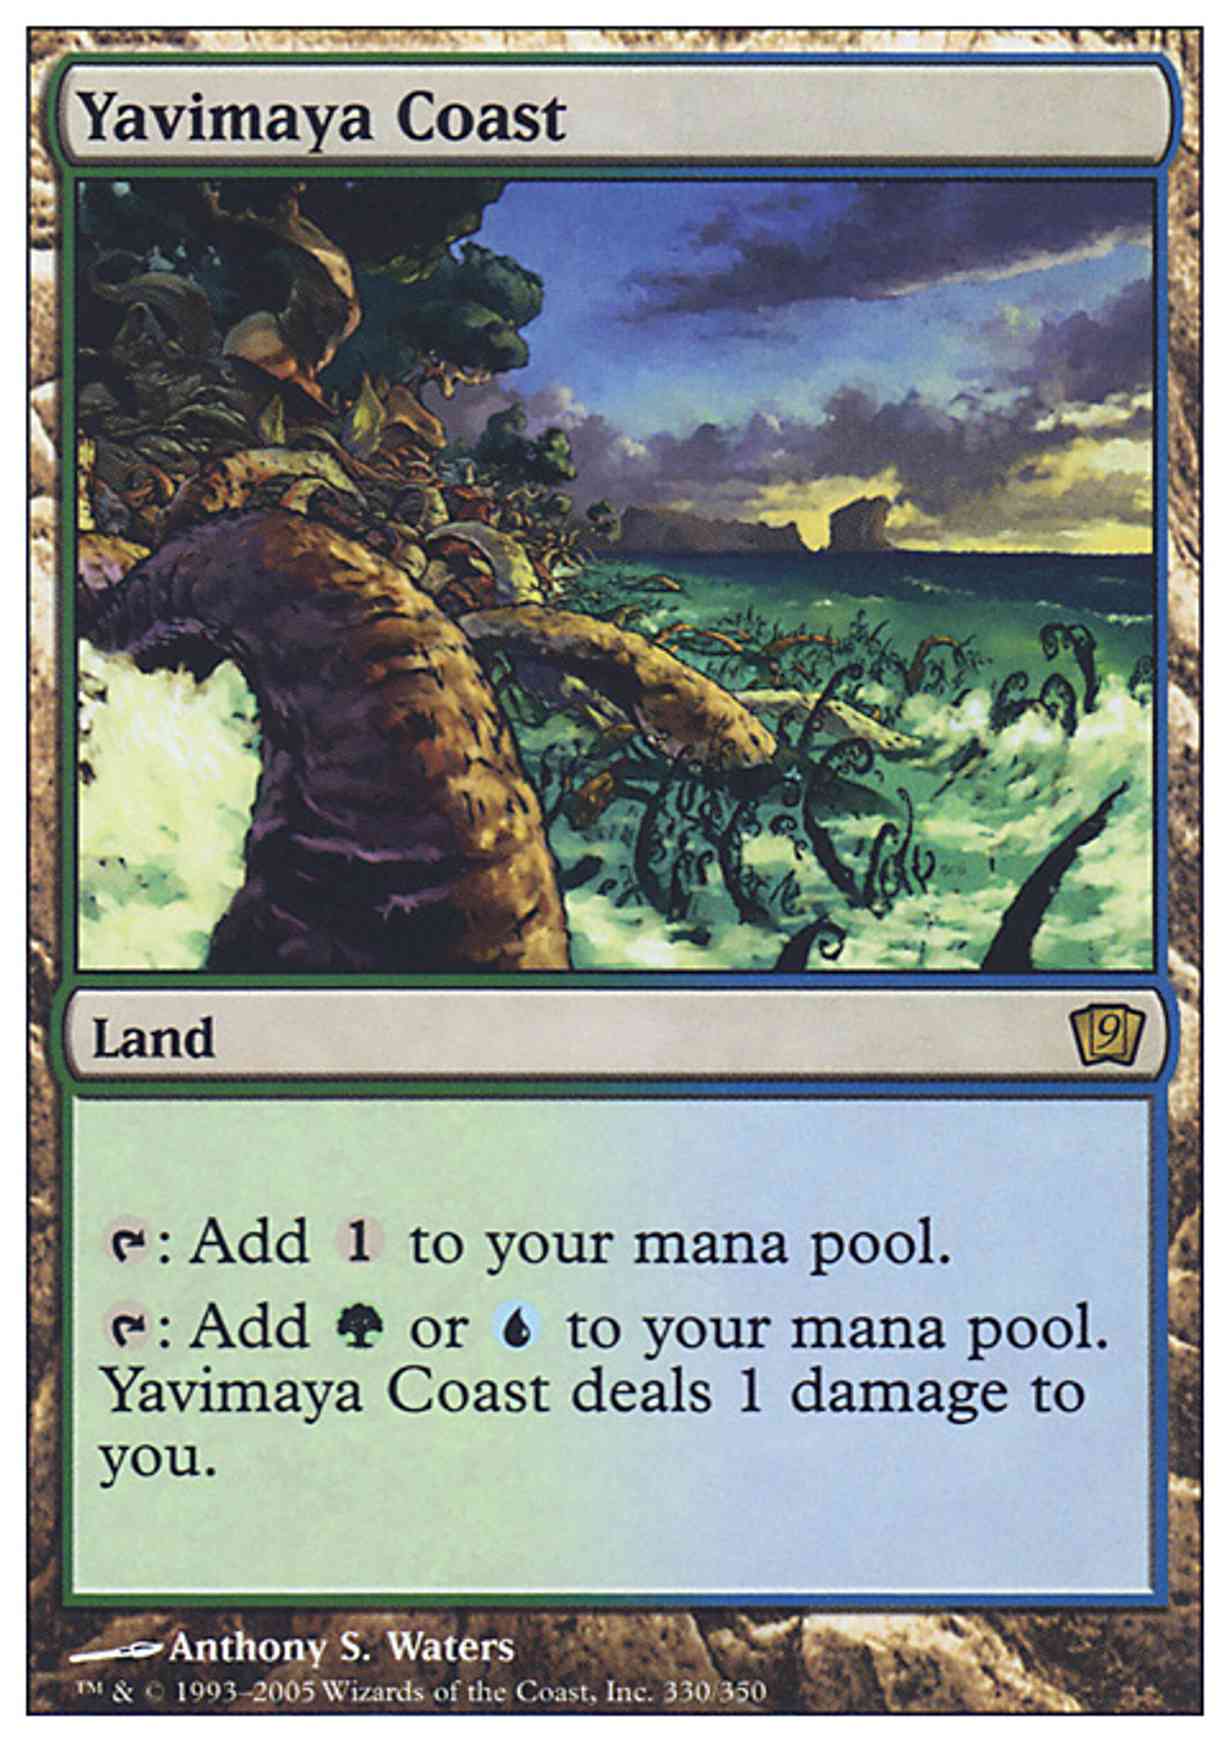 Yavimaya Coast magic card front